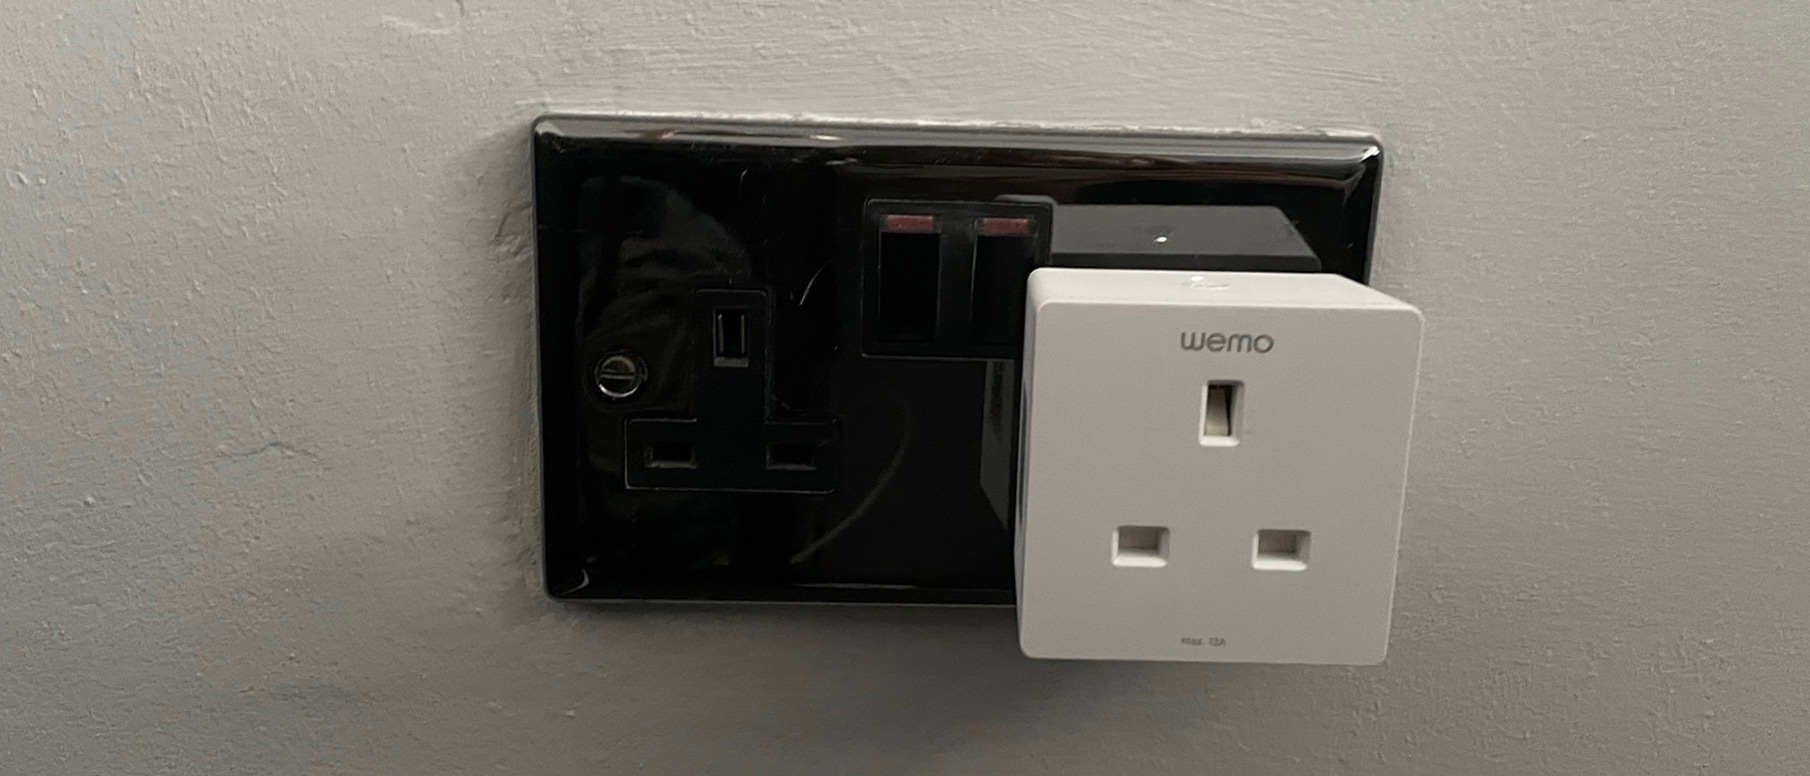  Wemo Mini Smart Plug, WiFi Enabled, Works with Alexa